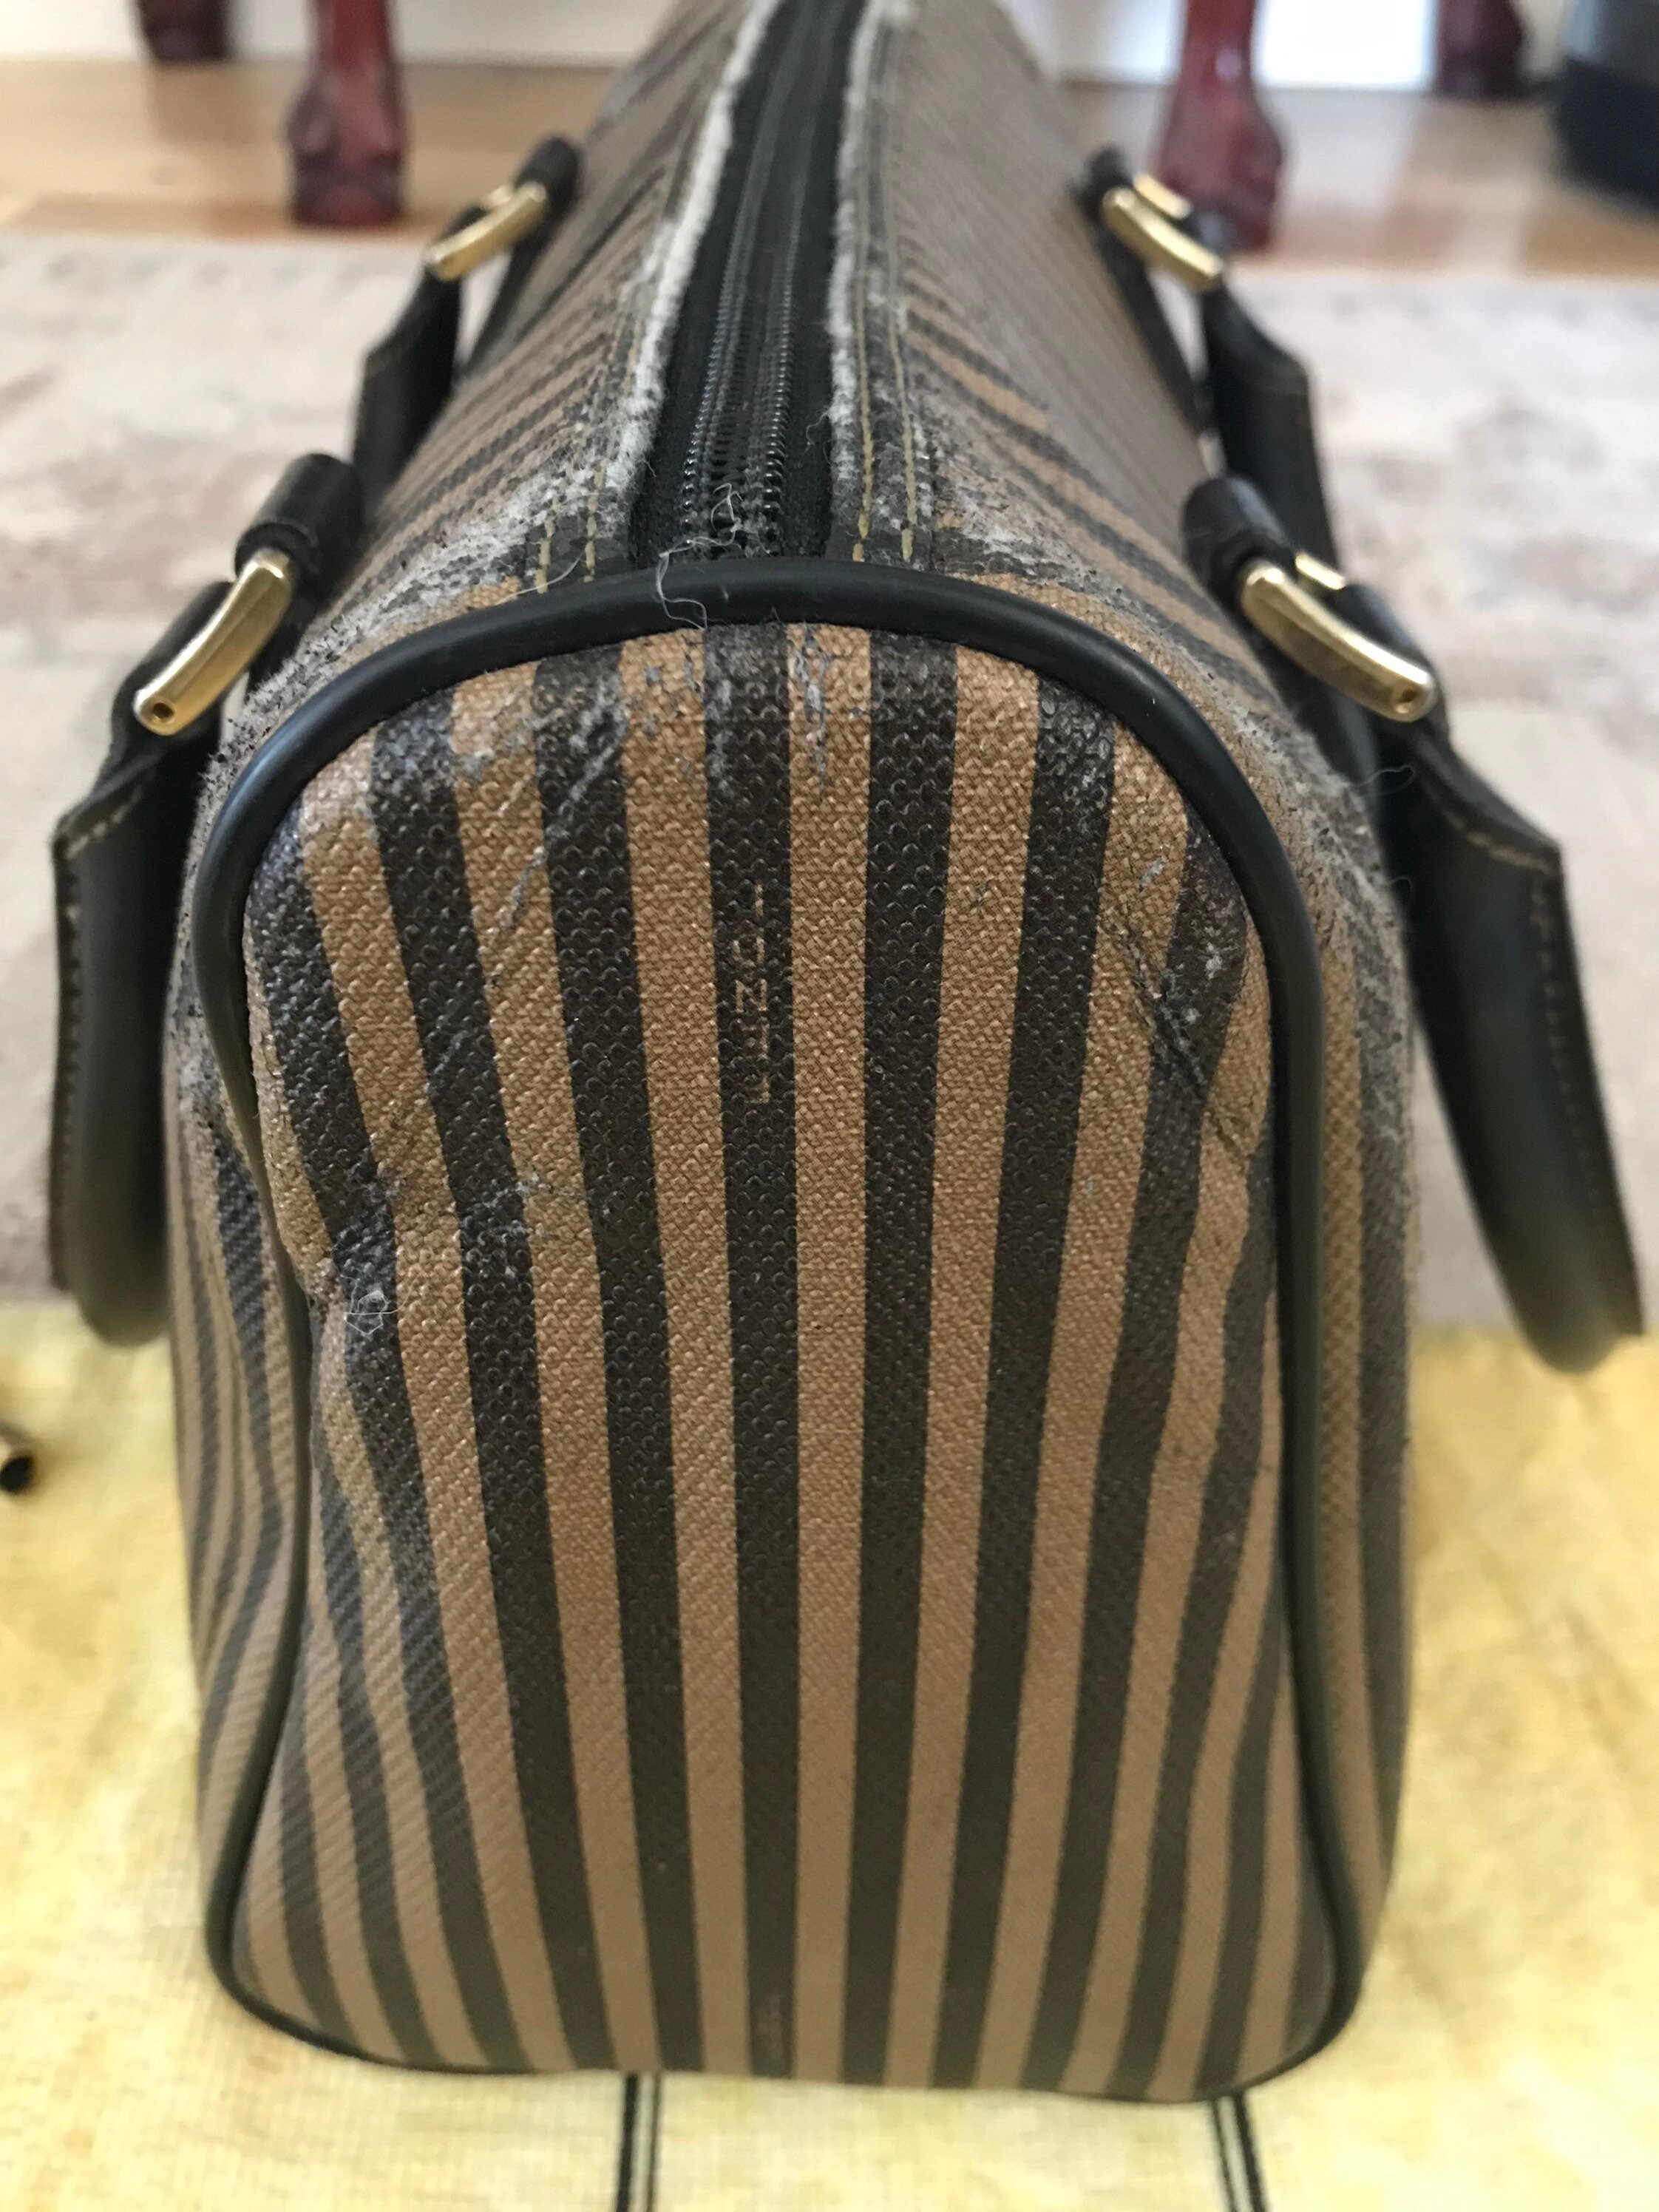 Authentic Vintage Fendi Speedy Bag Made in Italy -  UK